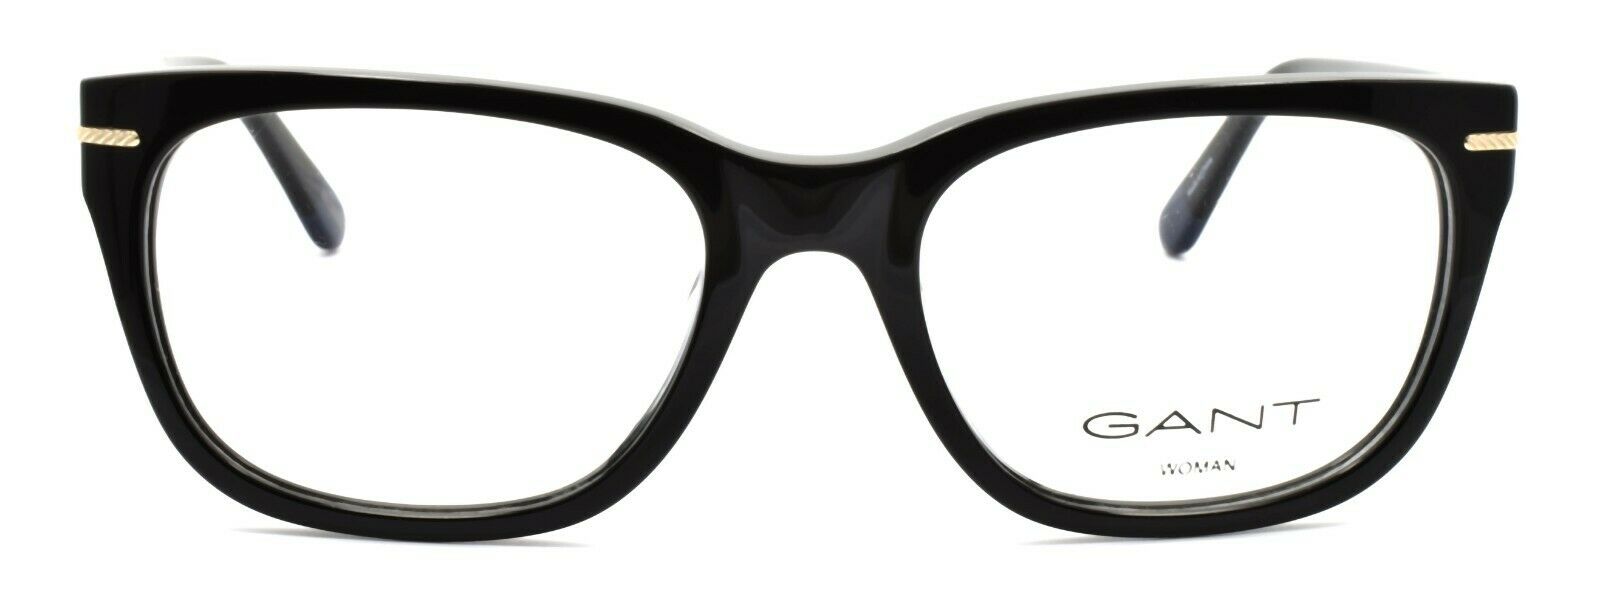 2-GANT GA4058 001 Women's Eyeglasses Frames 52-18-140 Shiny Black + CASE-664689790180-IKSpecs